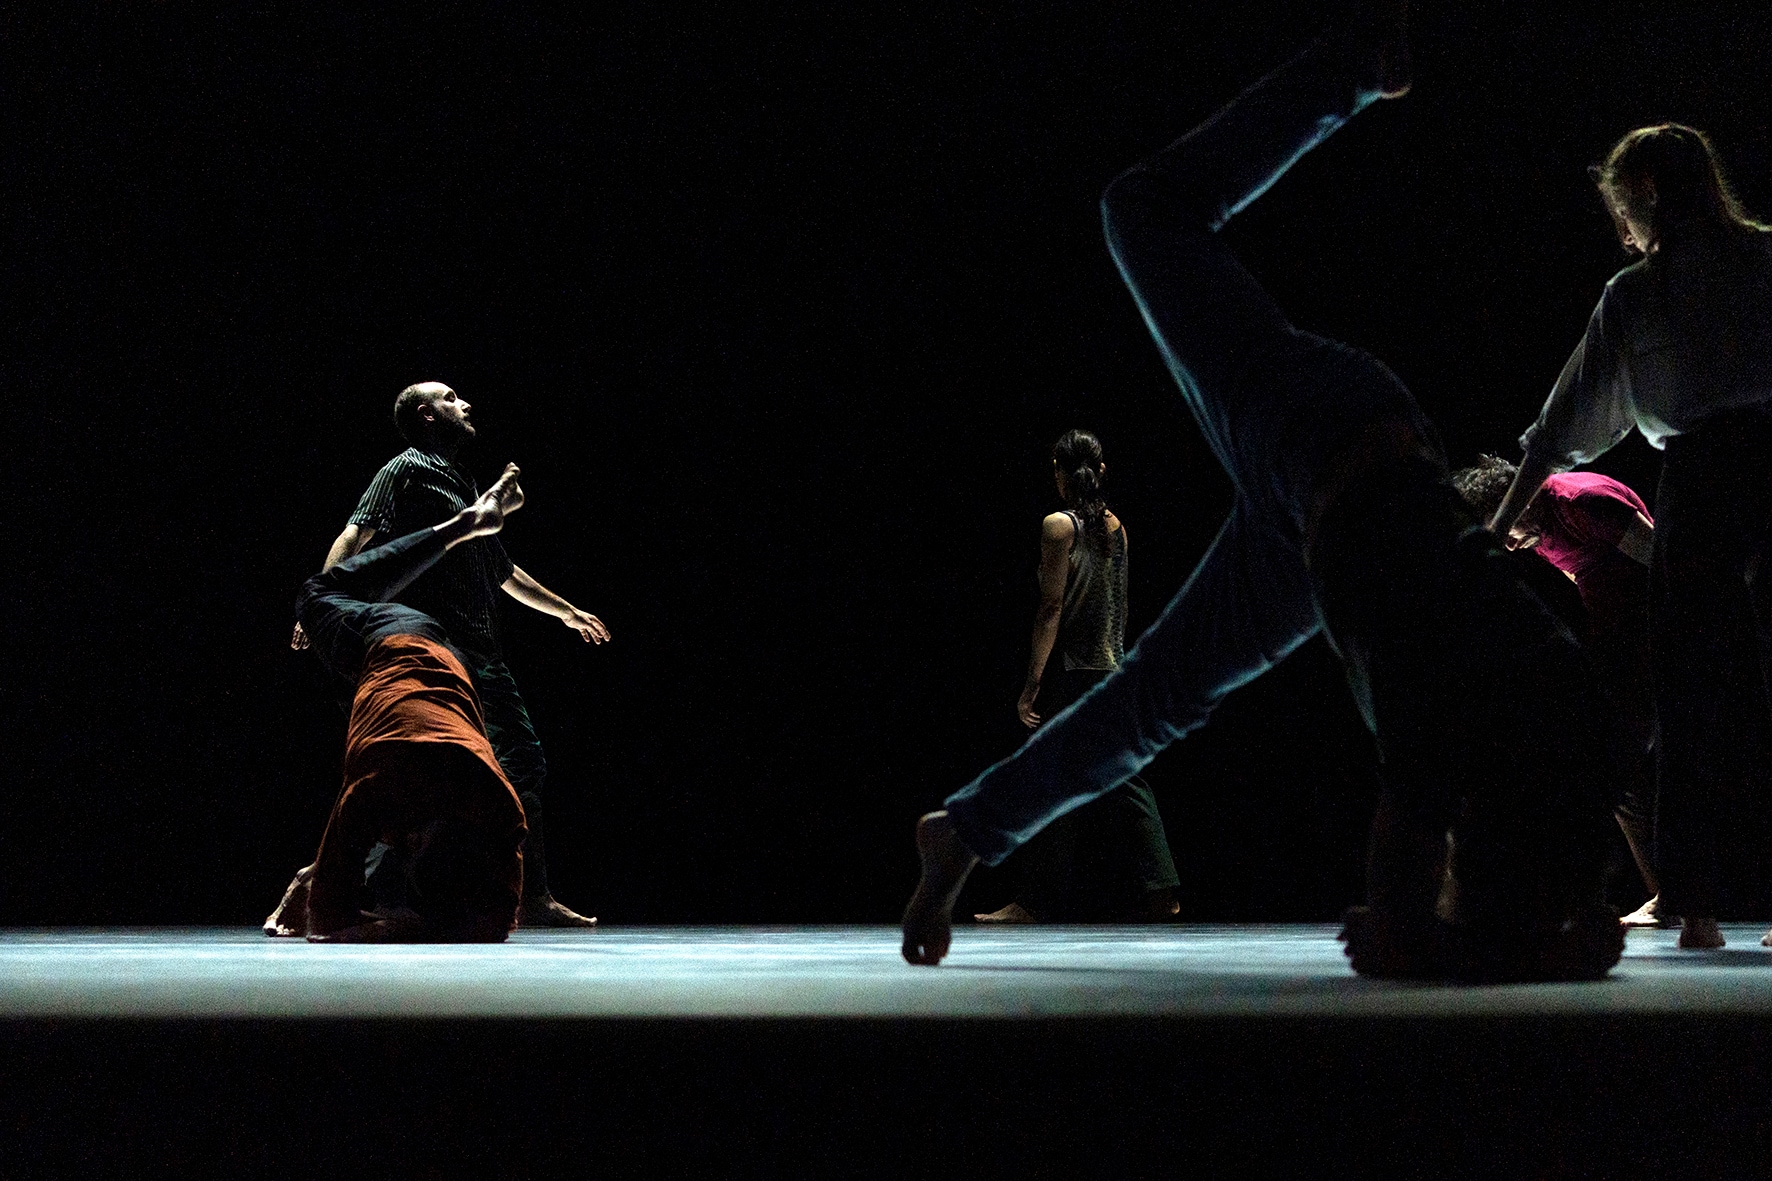 Dancers moving around on a dark stage